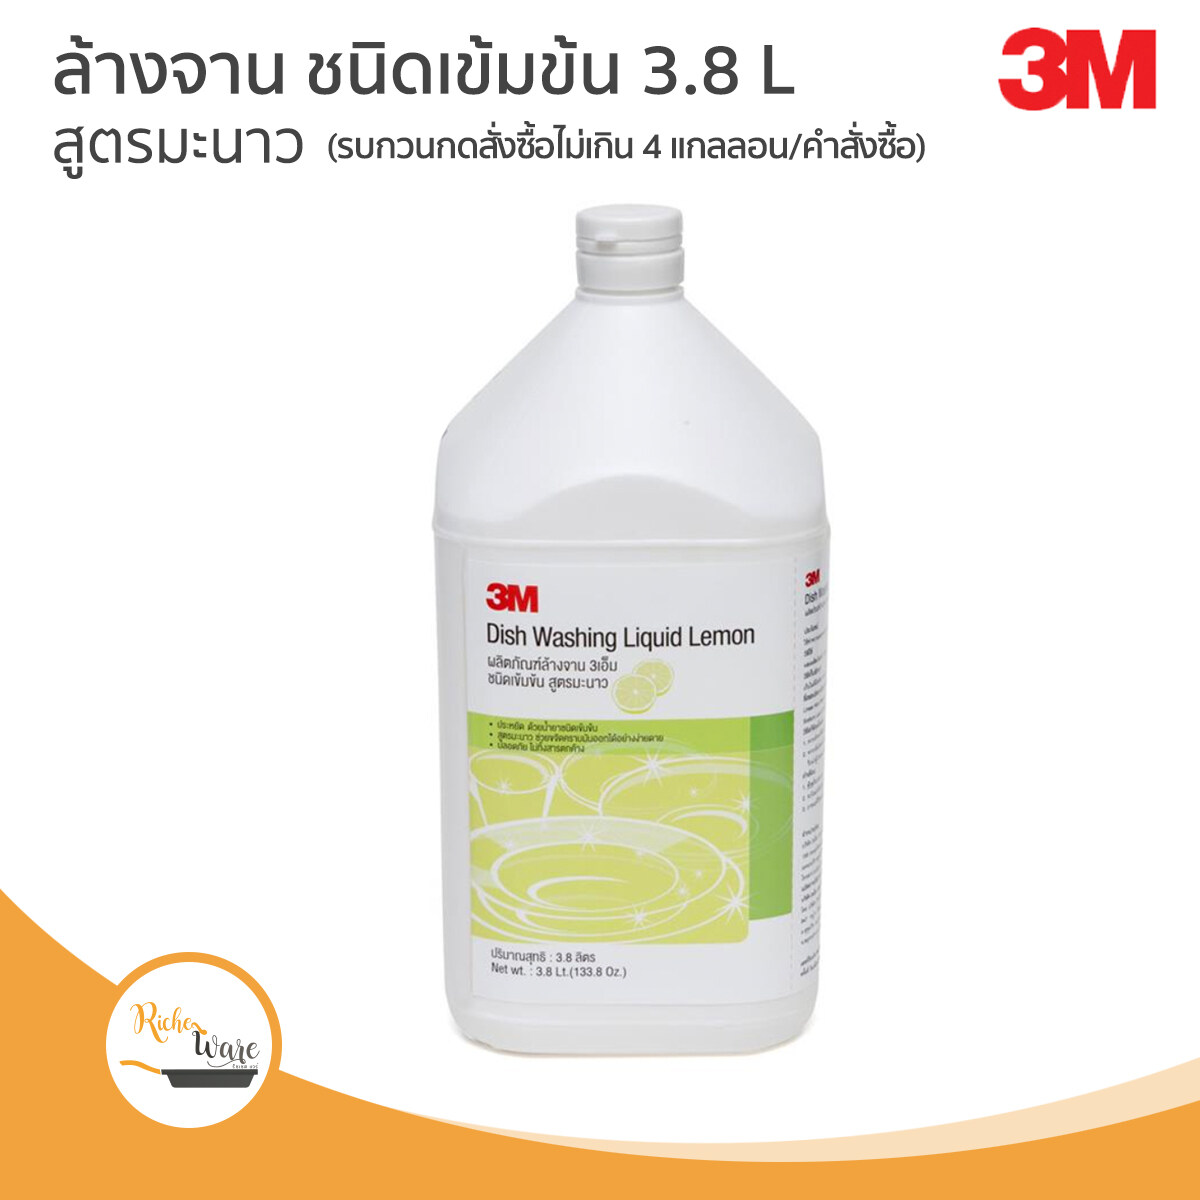 3M ผลิตภัณฑ์ล้างจาน ชนิดเข้มข้น สูตรมะนาว ขนาด 3.8 ลิตร 3M Dish Washing Liquid Lemon, 3.8L